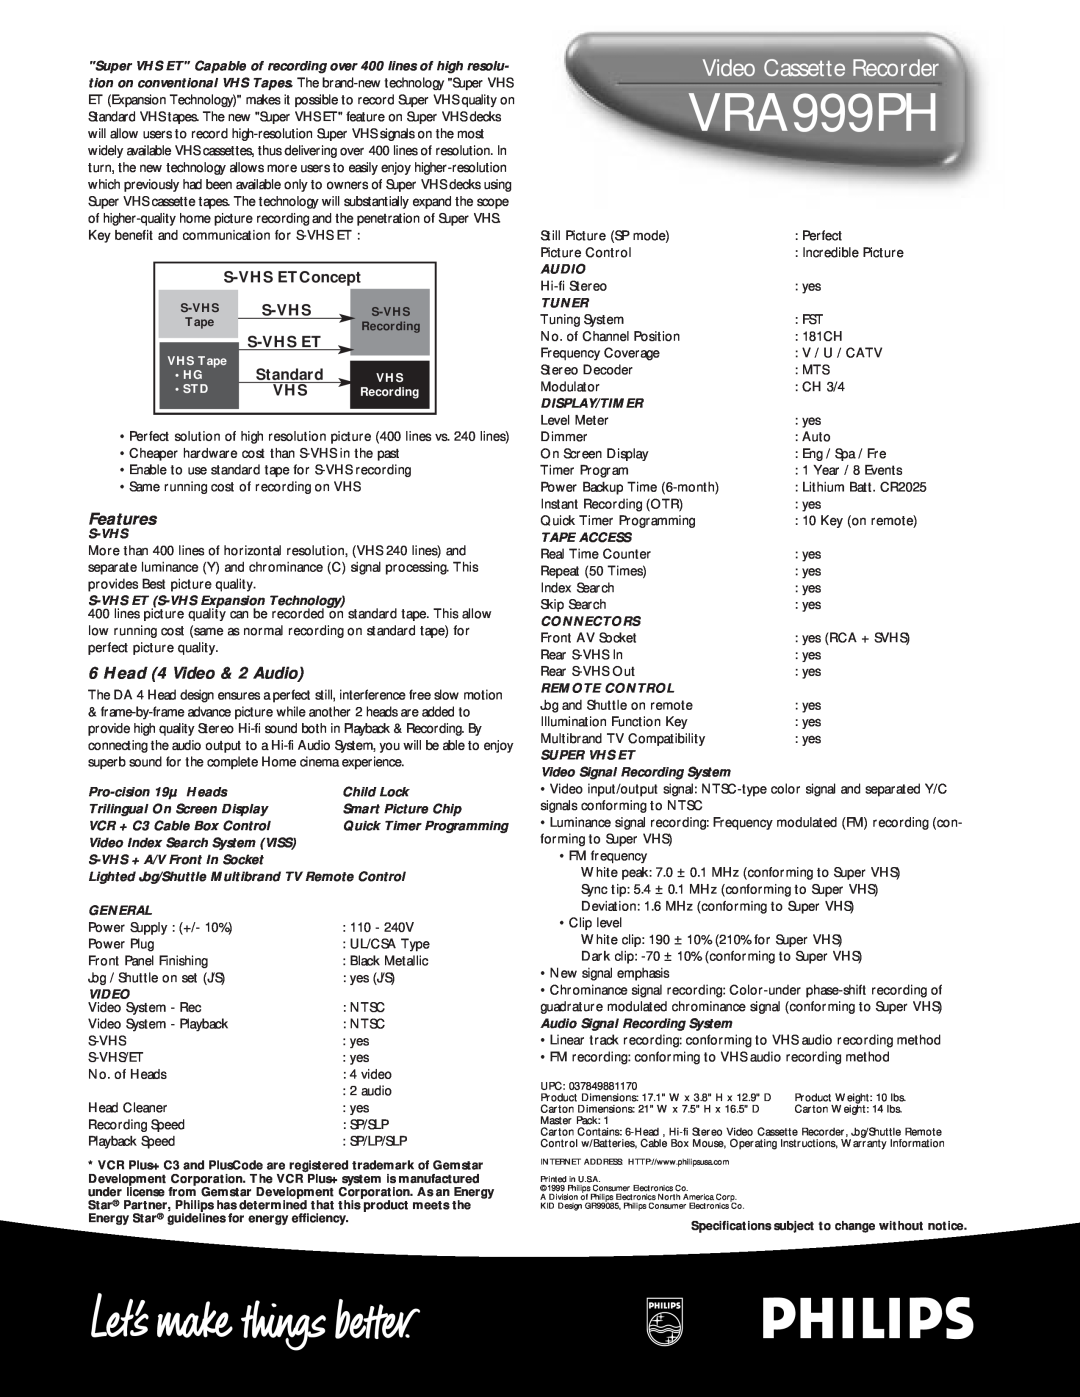 Philips VRA999PH manual Video Cassette Recorder, Features, Head 4 Video & 2 Audio, S-VHS ETConcept, S-Vhs Et, Standard 